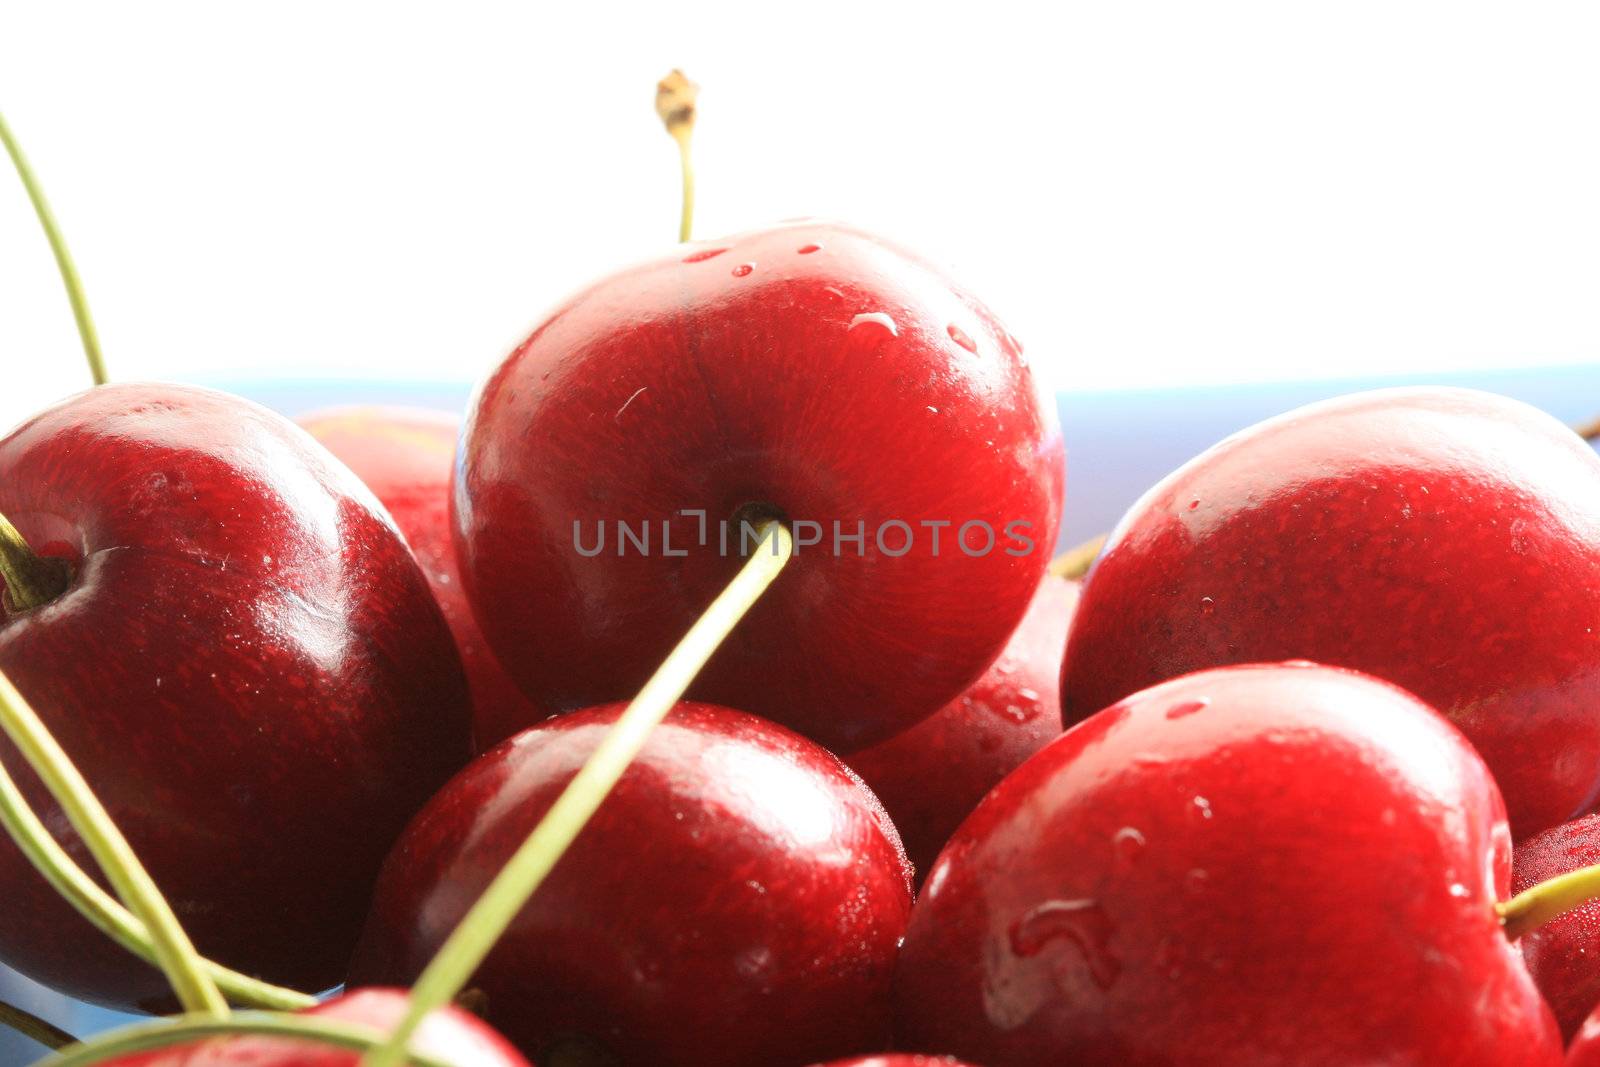 Bowl of fresh cherries, high key lighting from behind